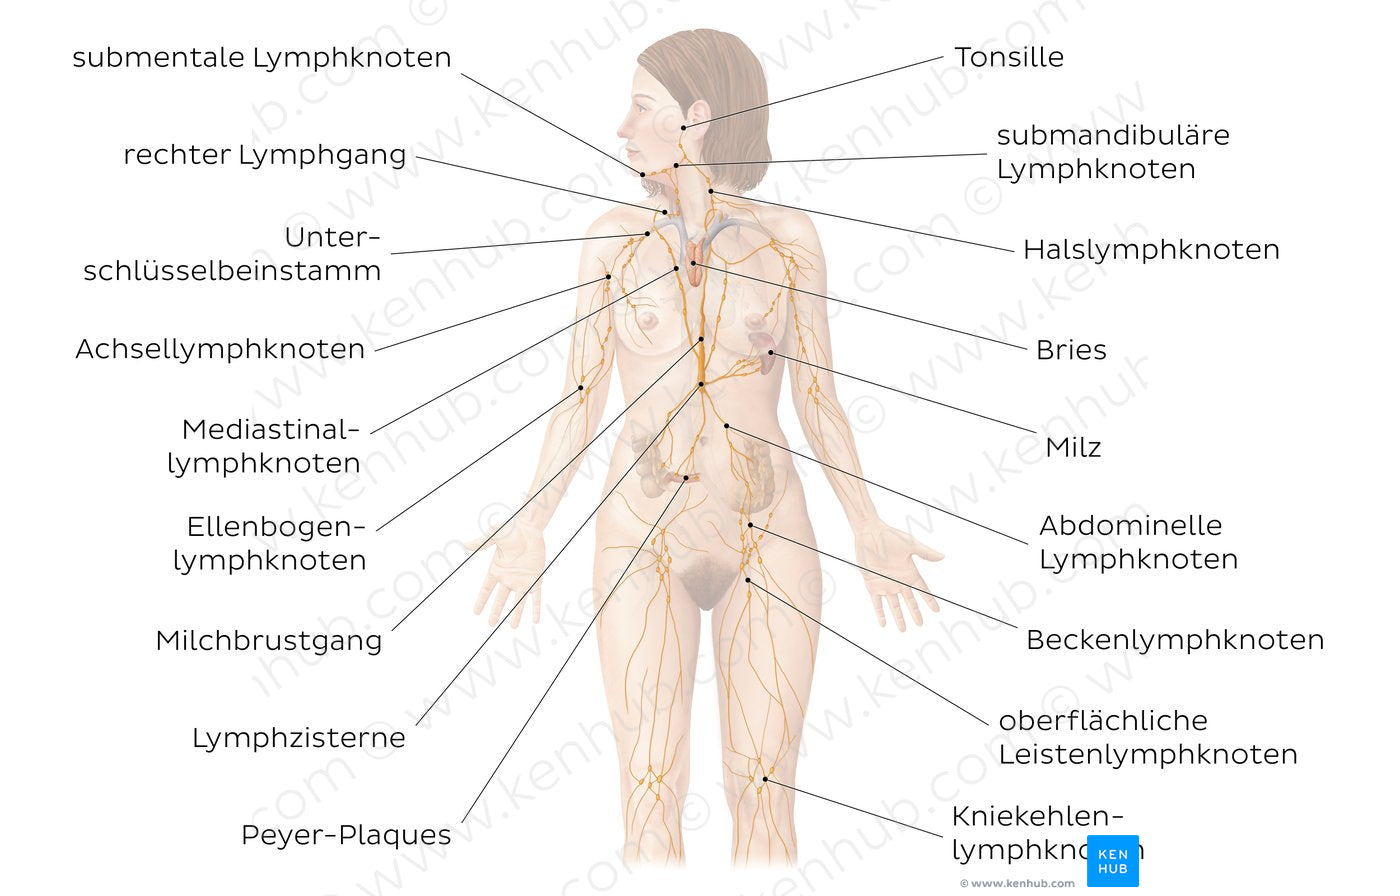 Lymphatic system (German)